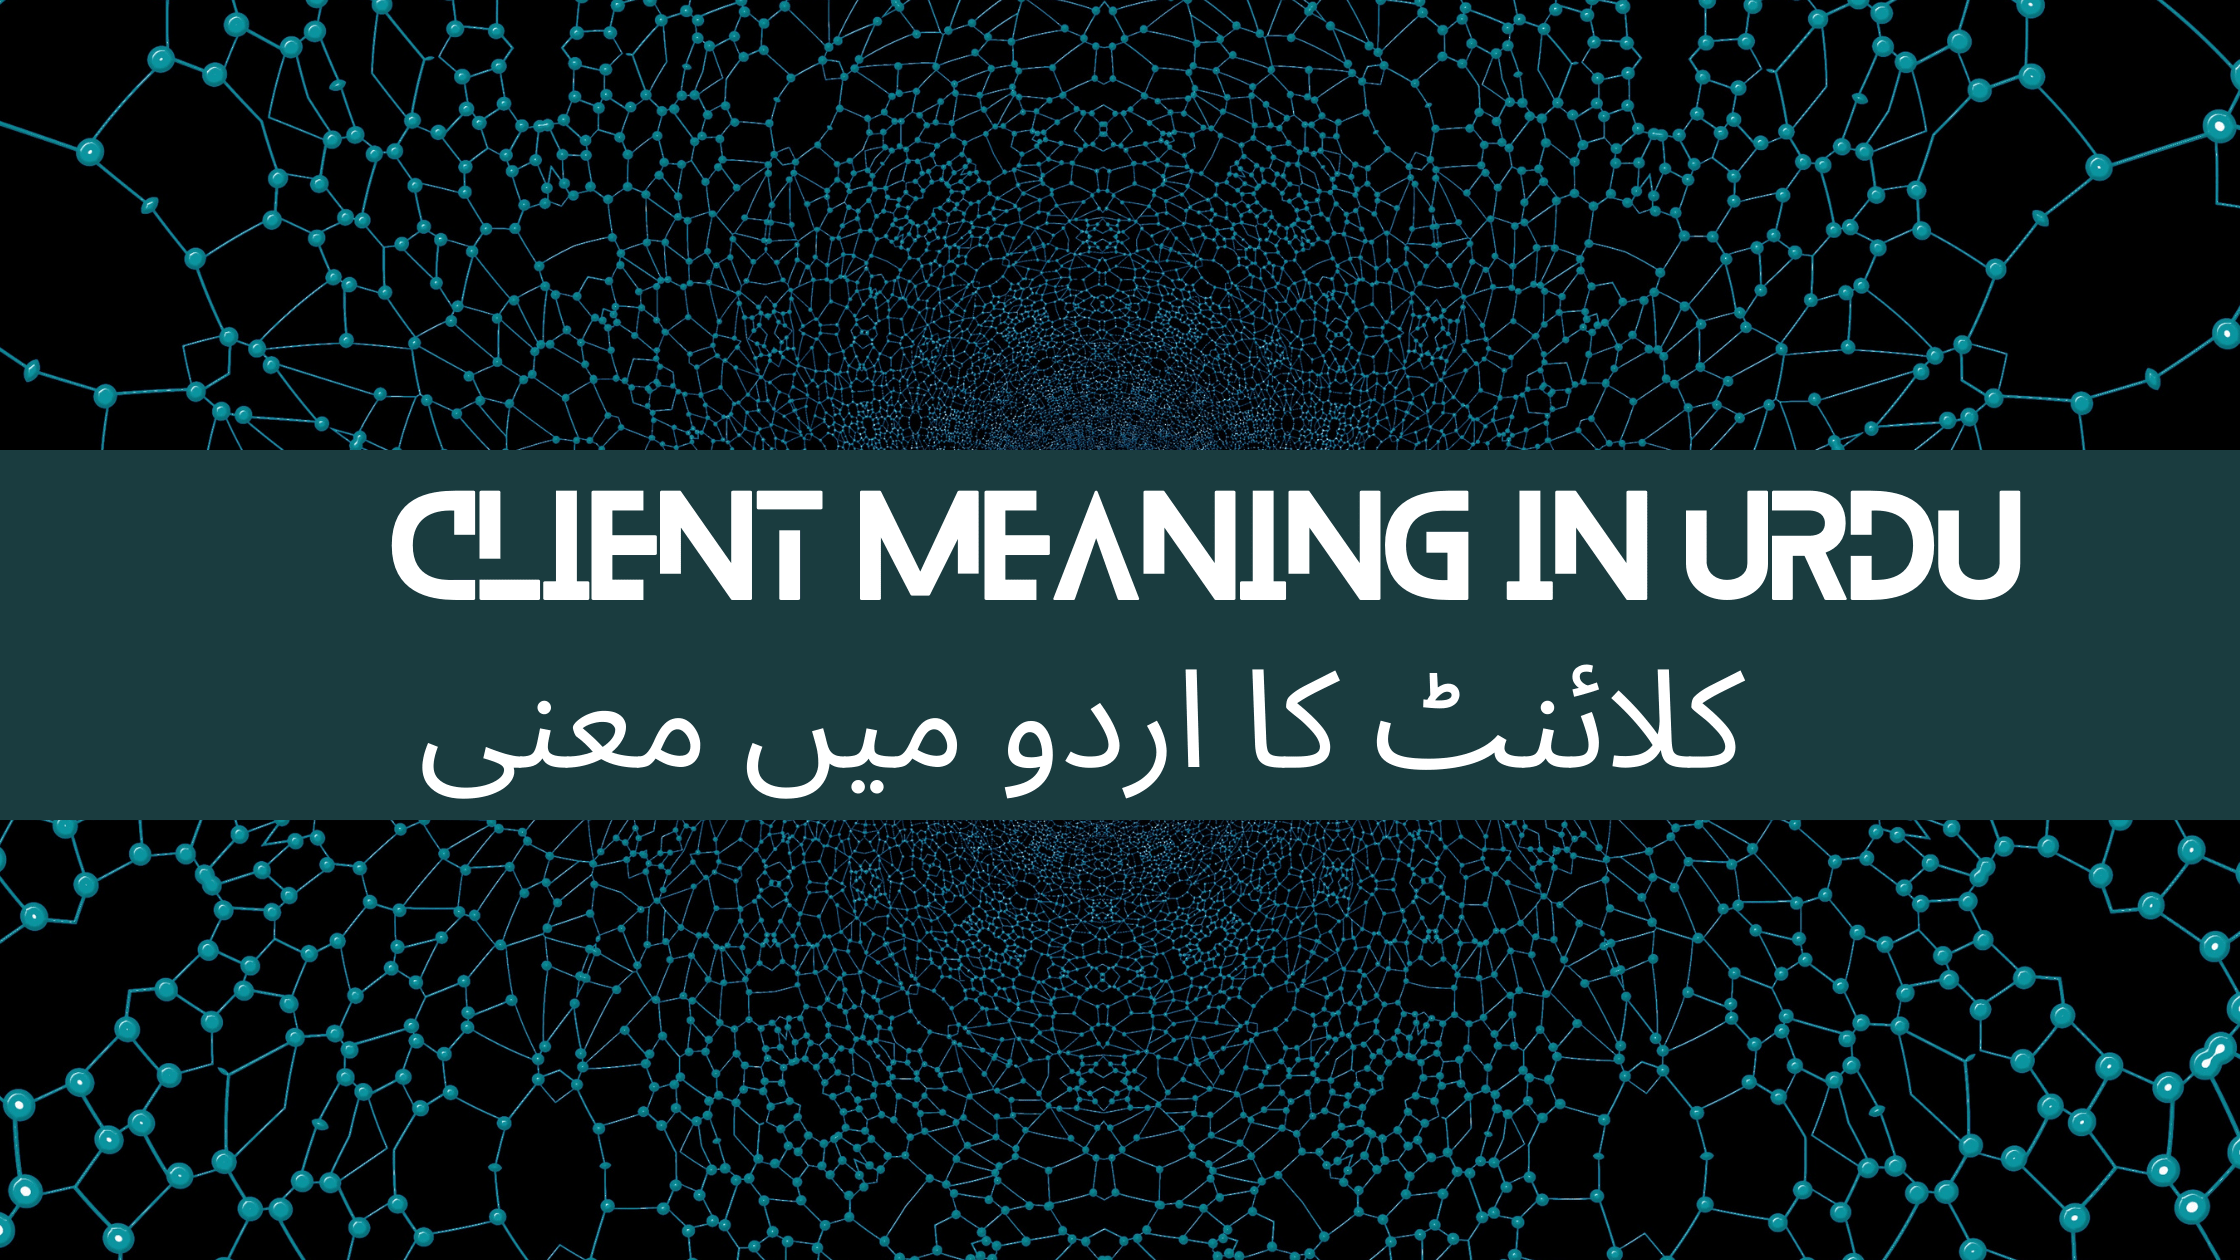 Client meaning in Urdu & Definition